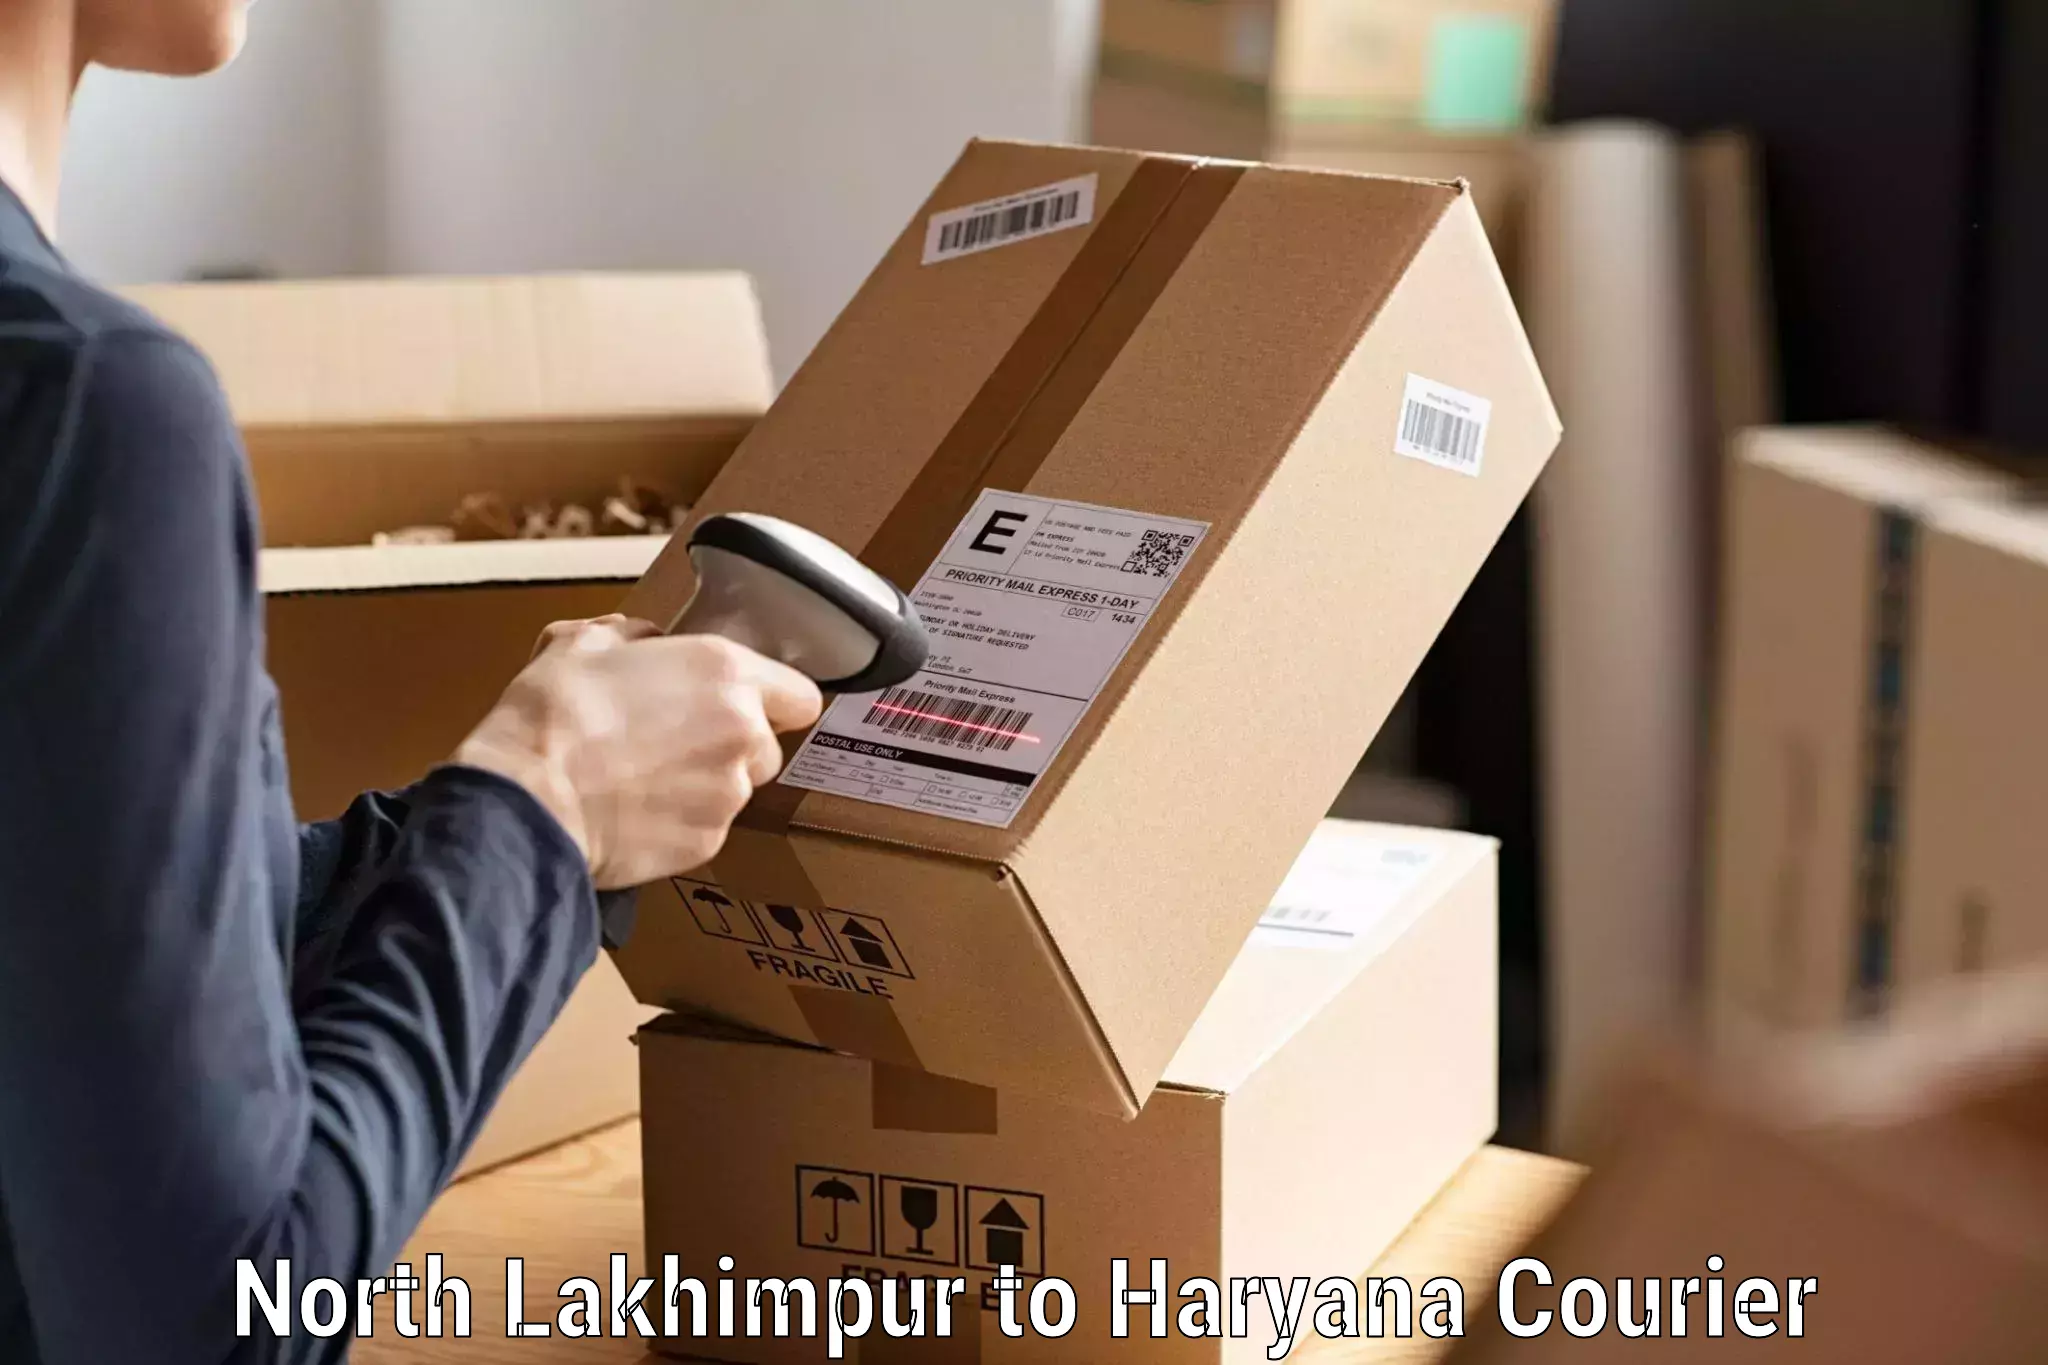 Custom courier packaging in North Lakhimpur to Sonipat